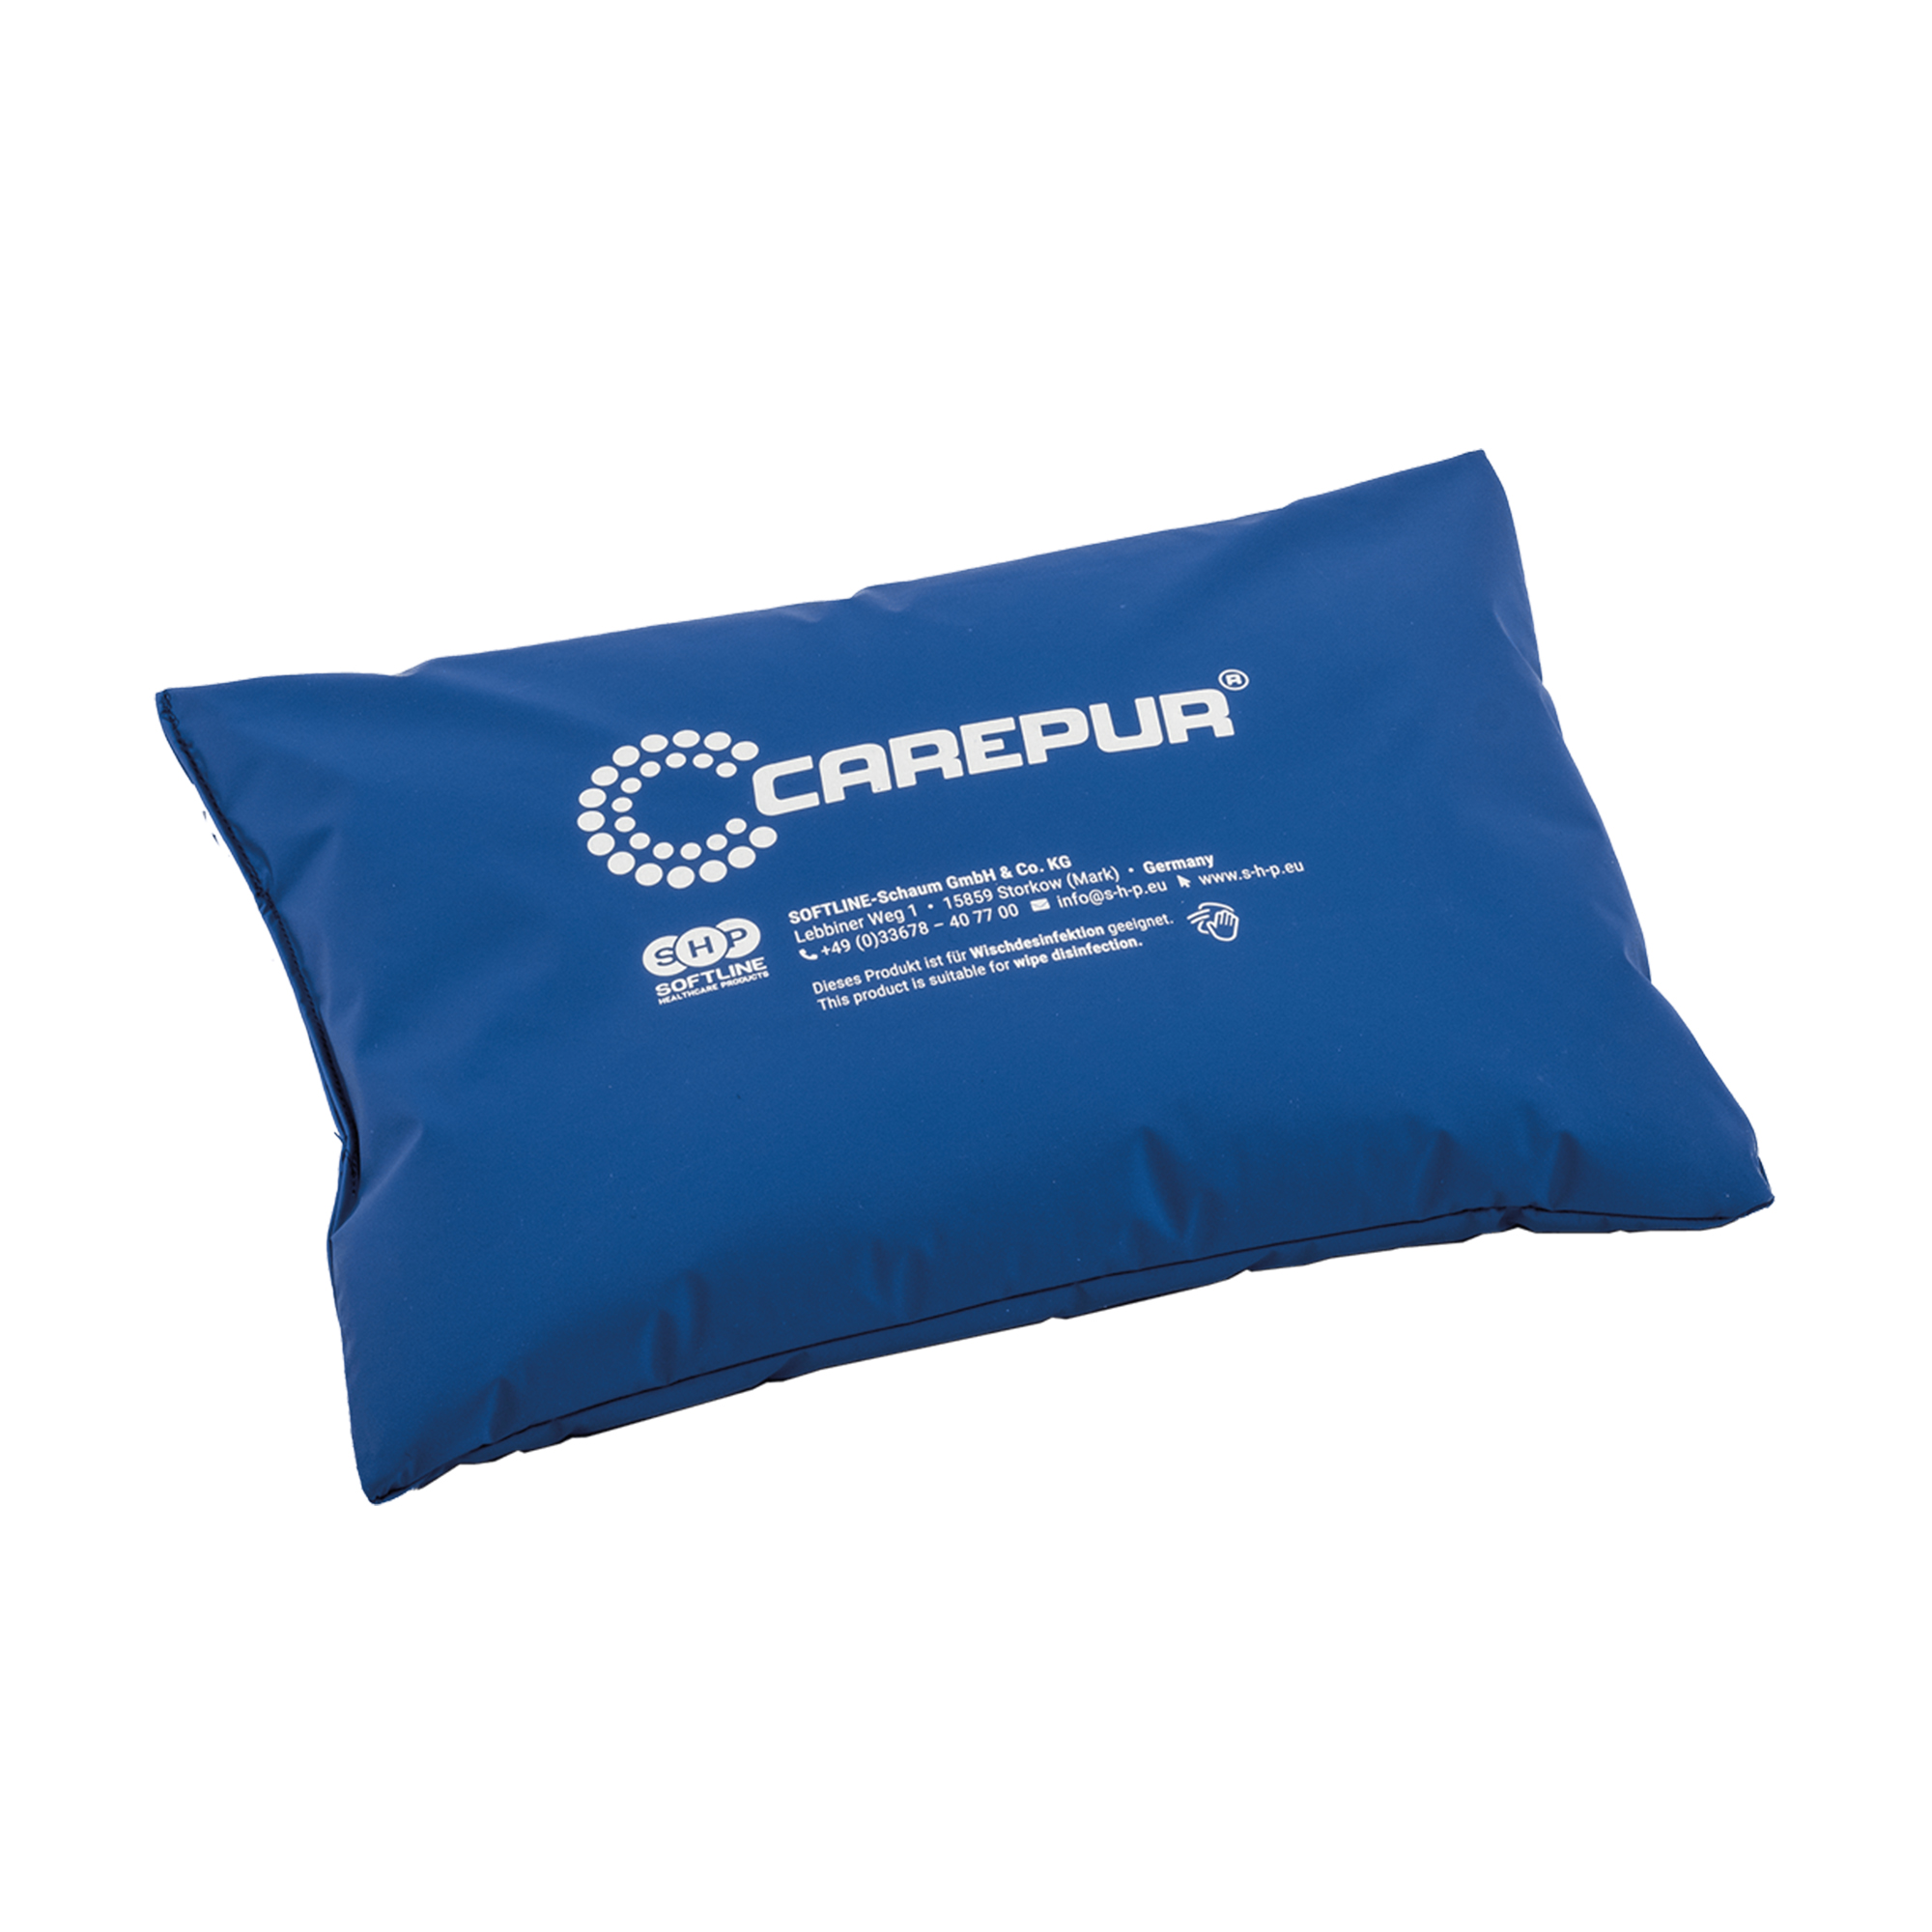 SHP CAREPUR Universal Pillow M (-15% filling), blue, 60 x 40 cm